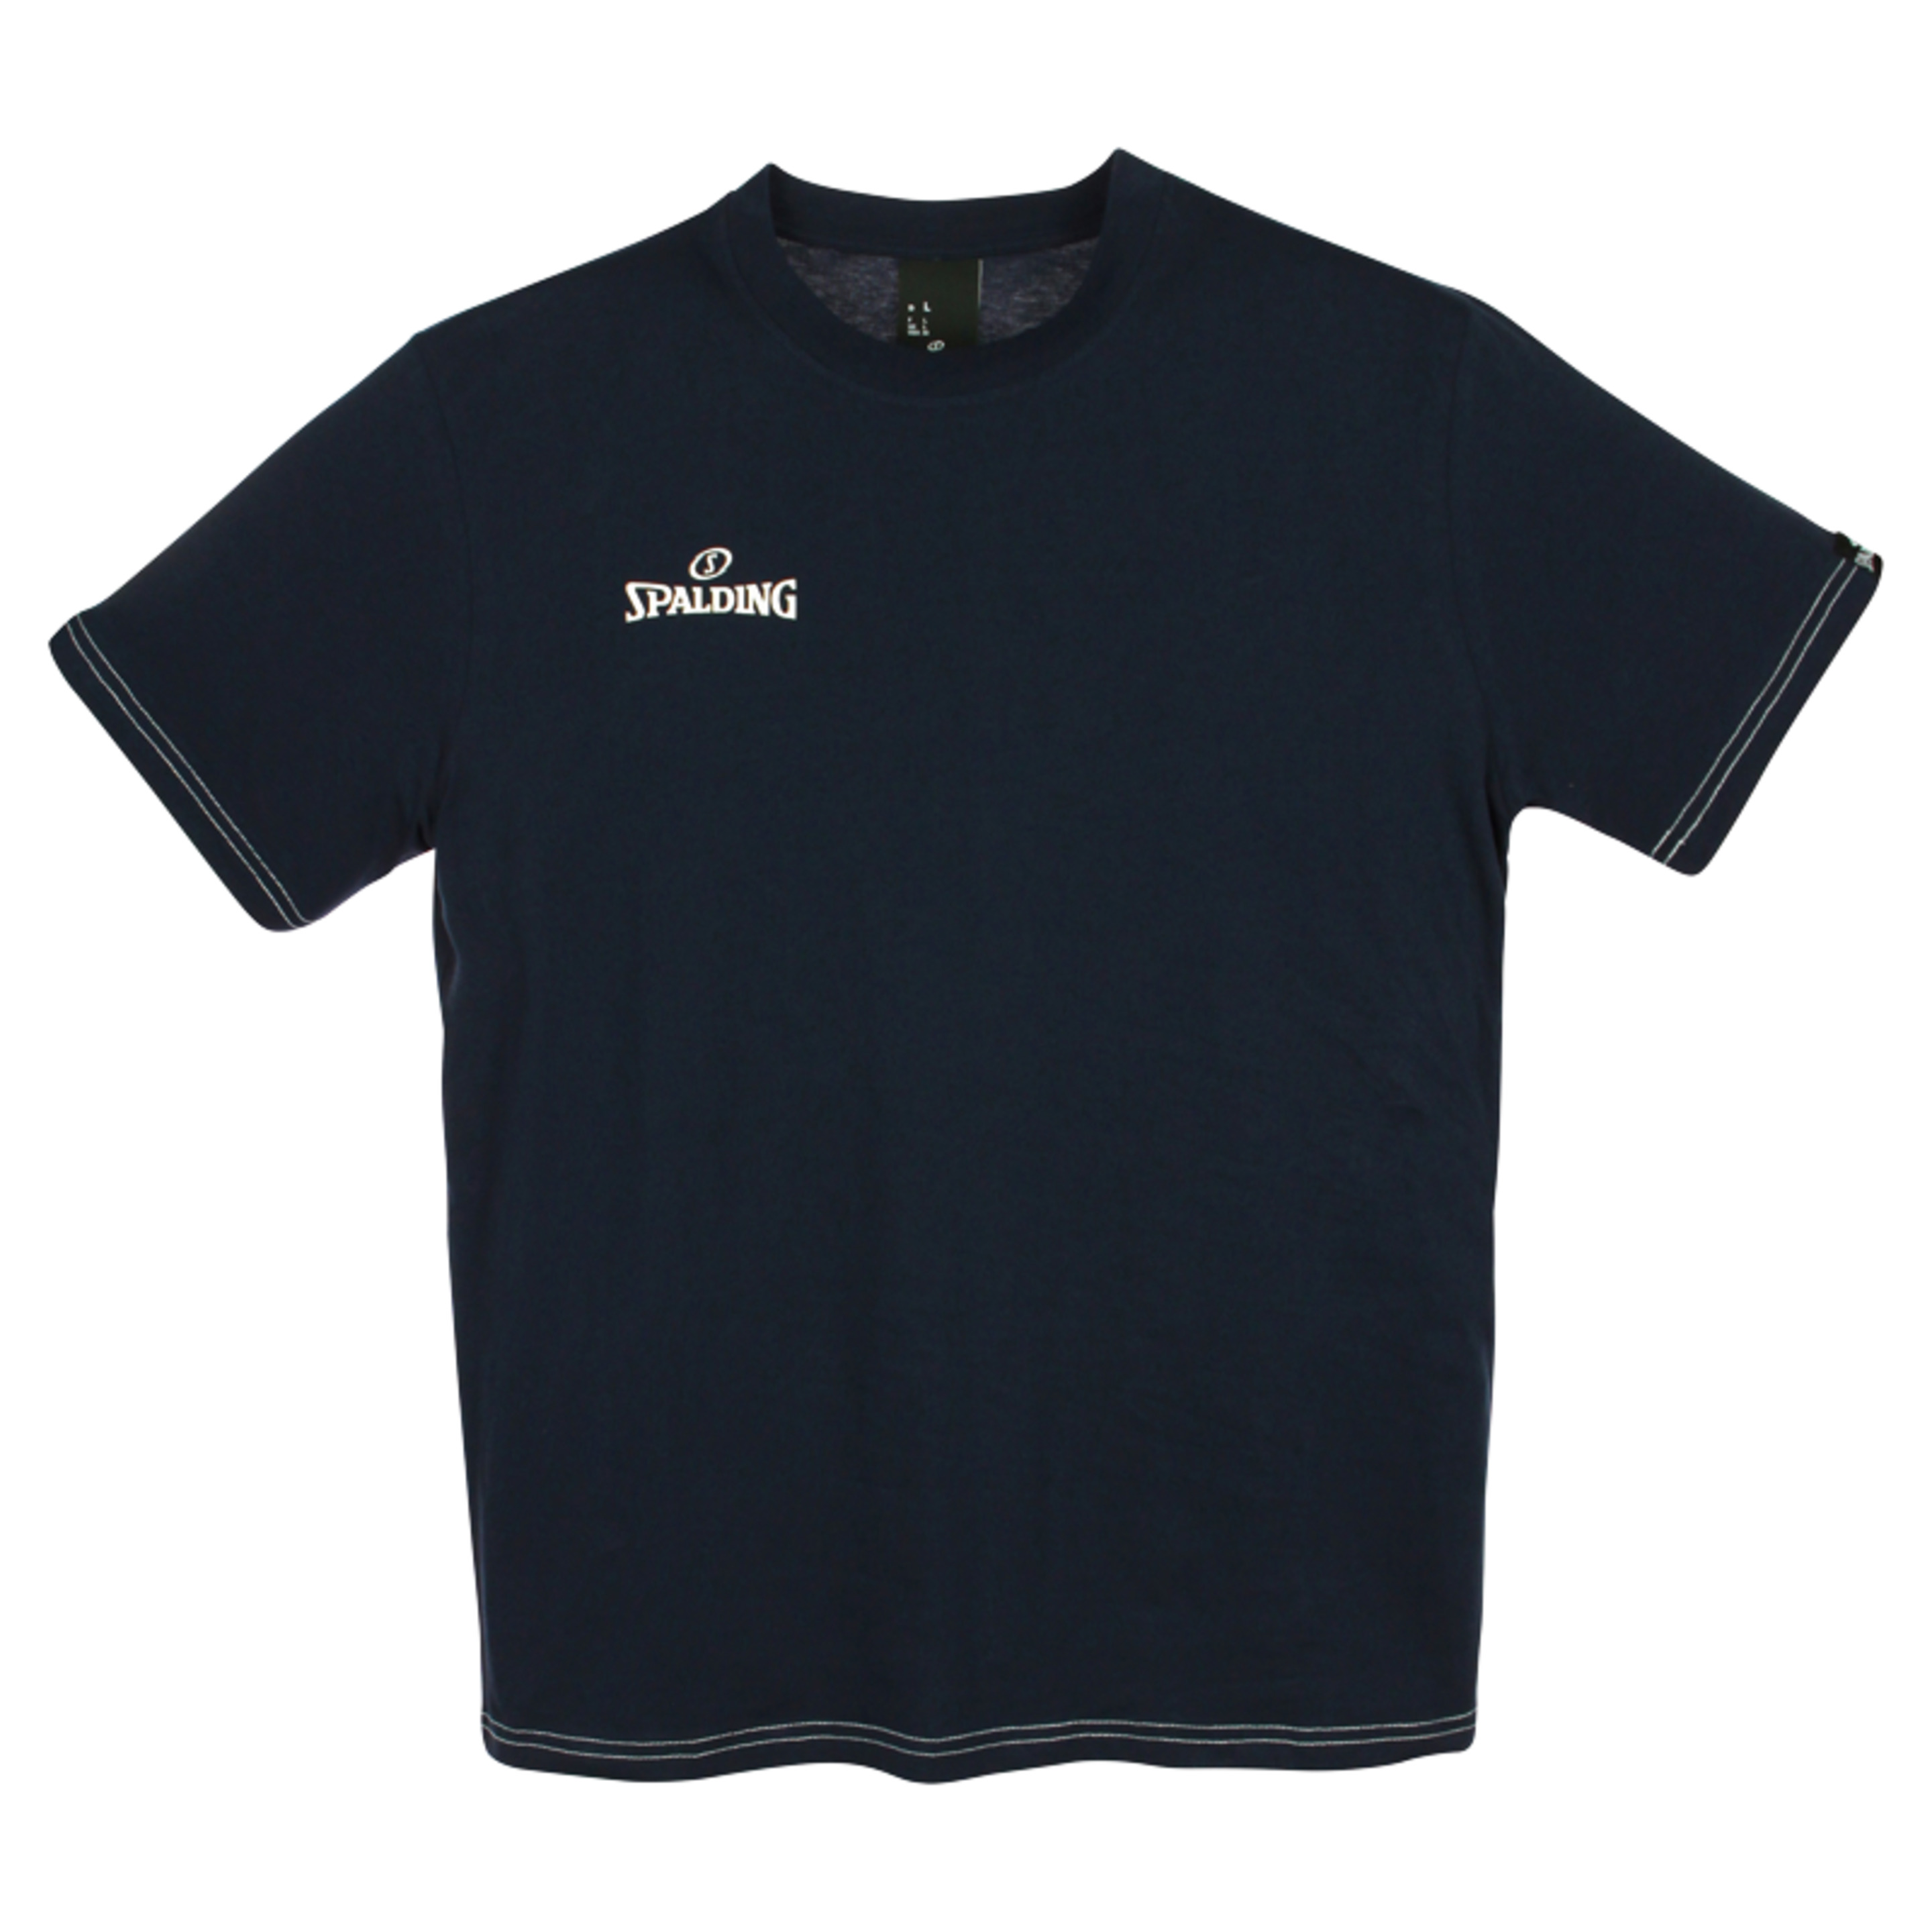 Team Ii T-shirt Azul Marino Spalding - azul_marino - Camiseta De Baloncesto Team Ii T-shirt  MKP